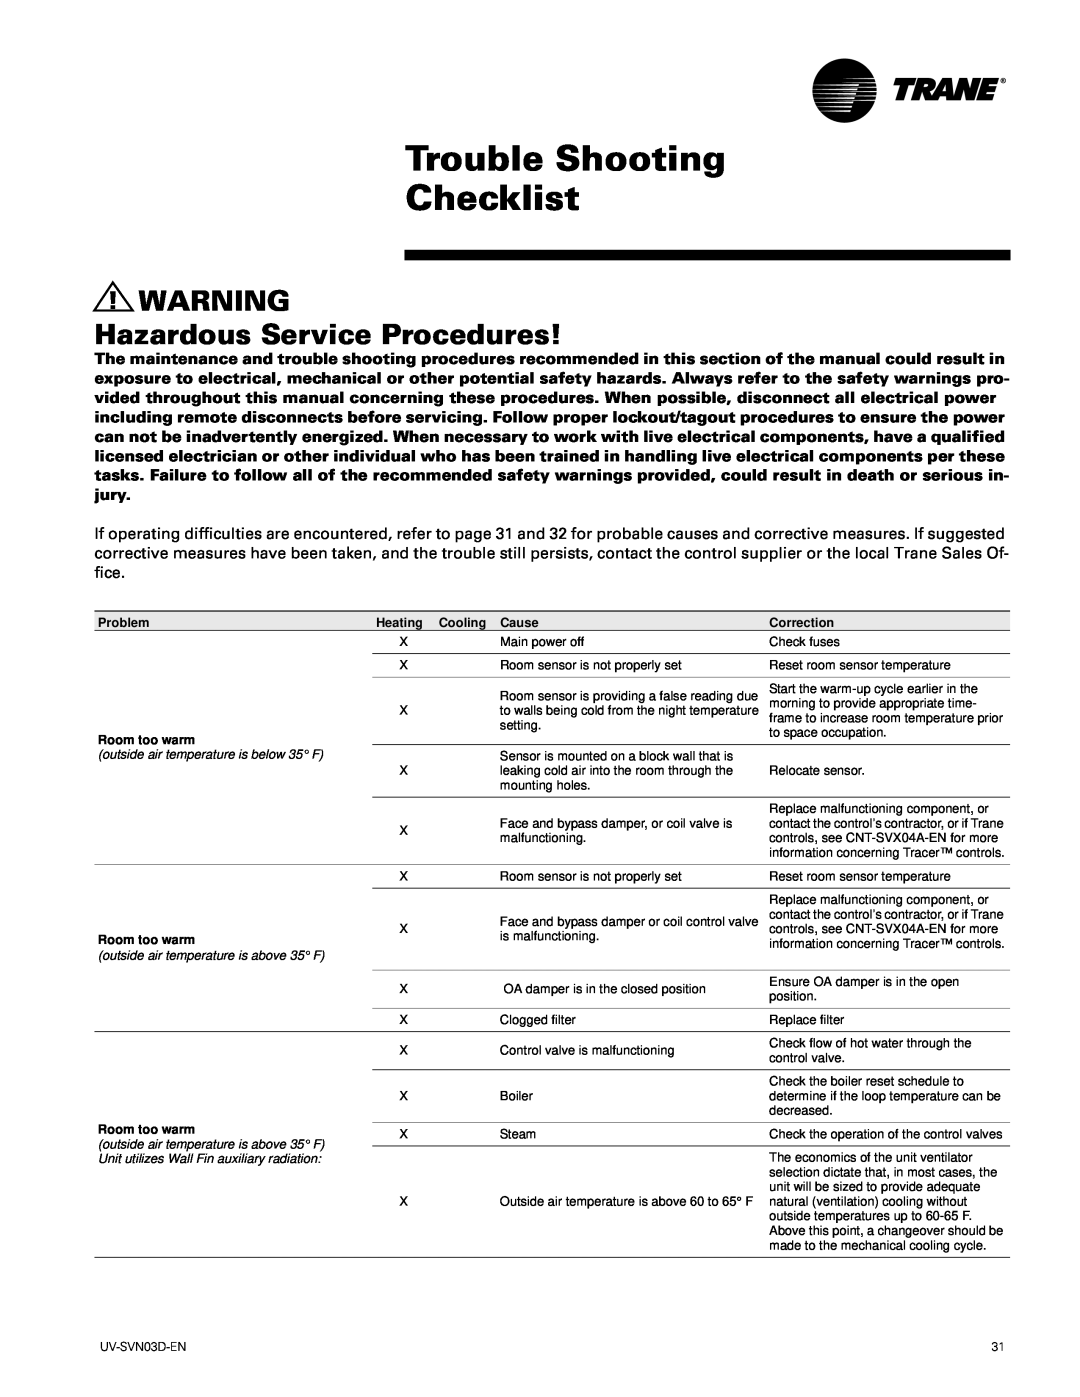 Trane 750 CFM manual Trouble Shooting Checklist, Hazardous Service Procedures, Problem, Heating Cooling Cause, Correction 